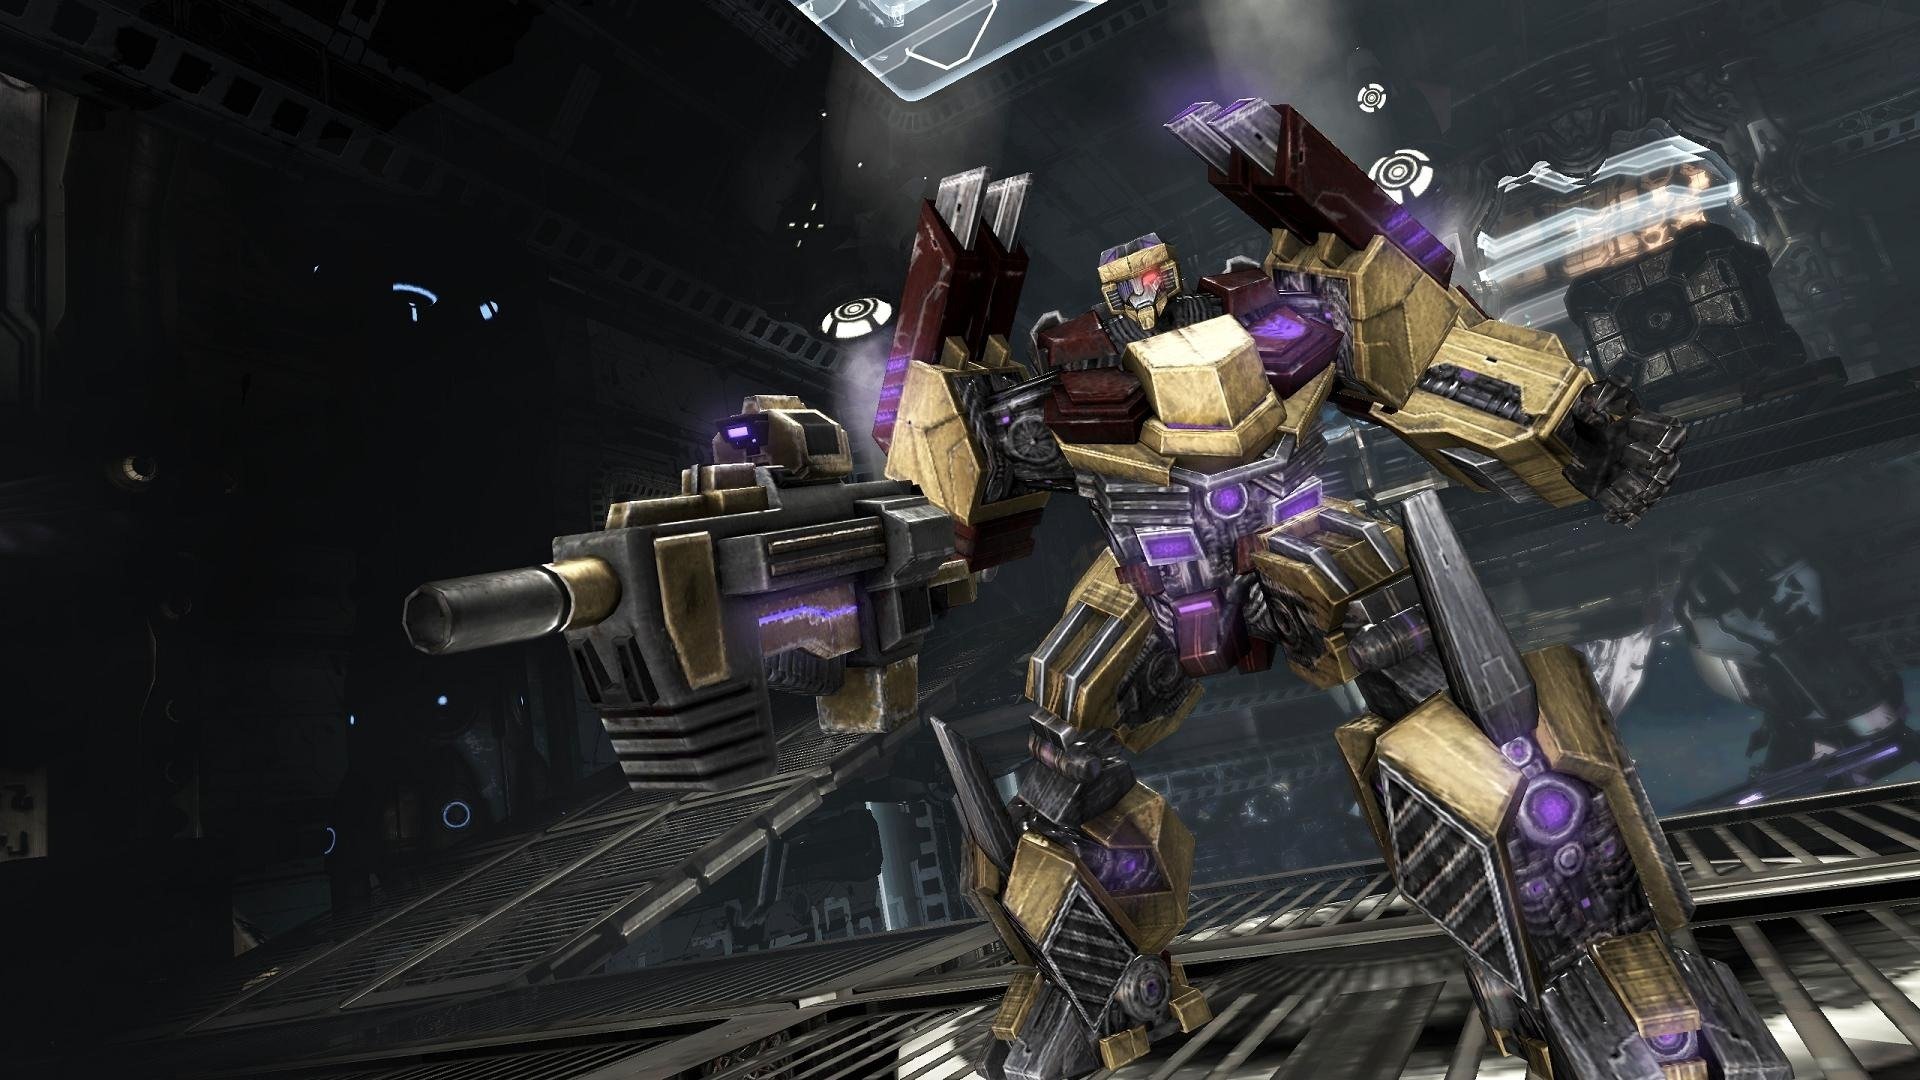 Transformers War For Cybertron Wallpaper